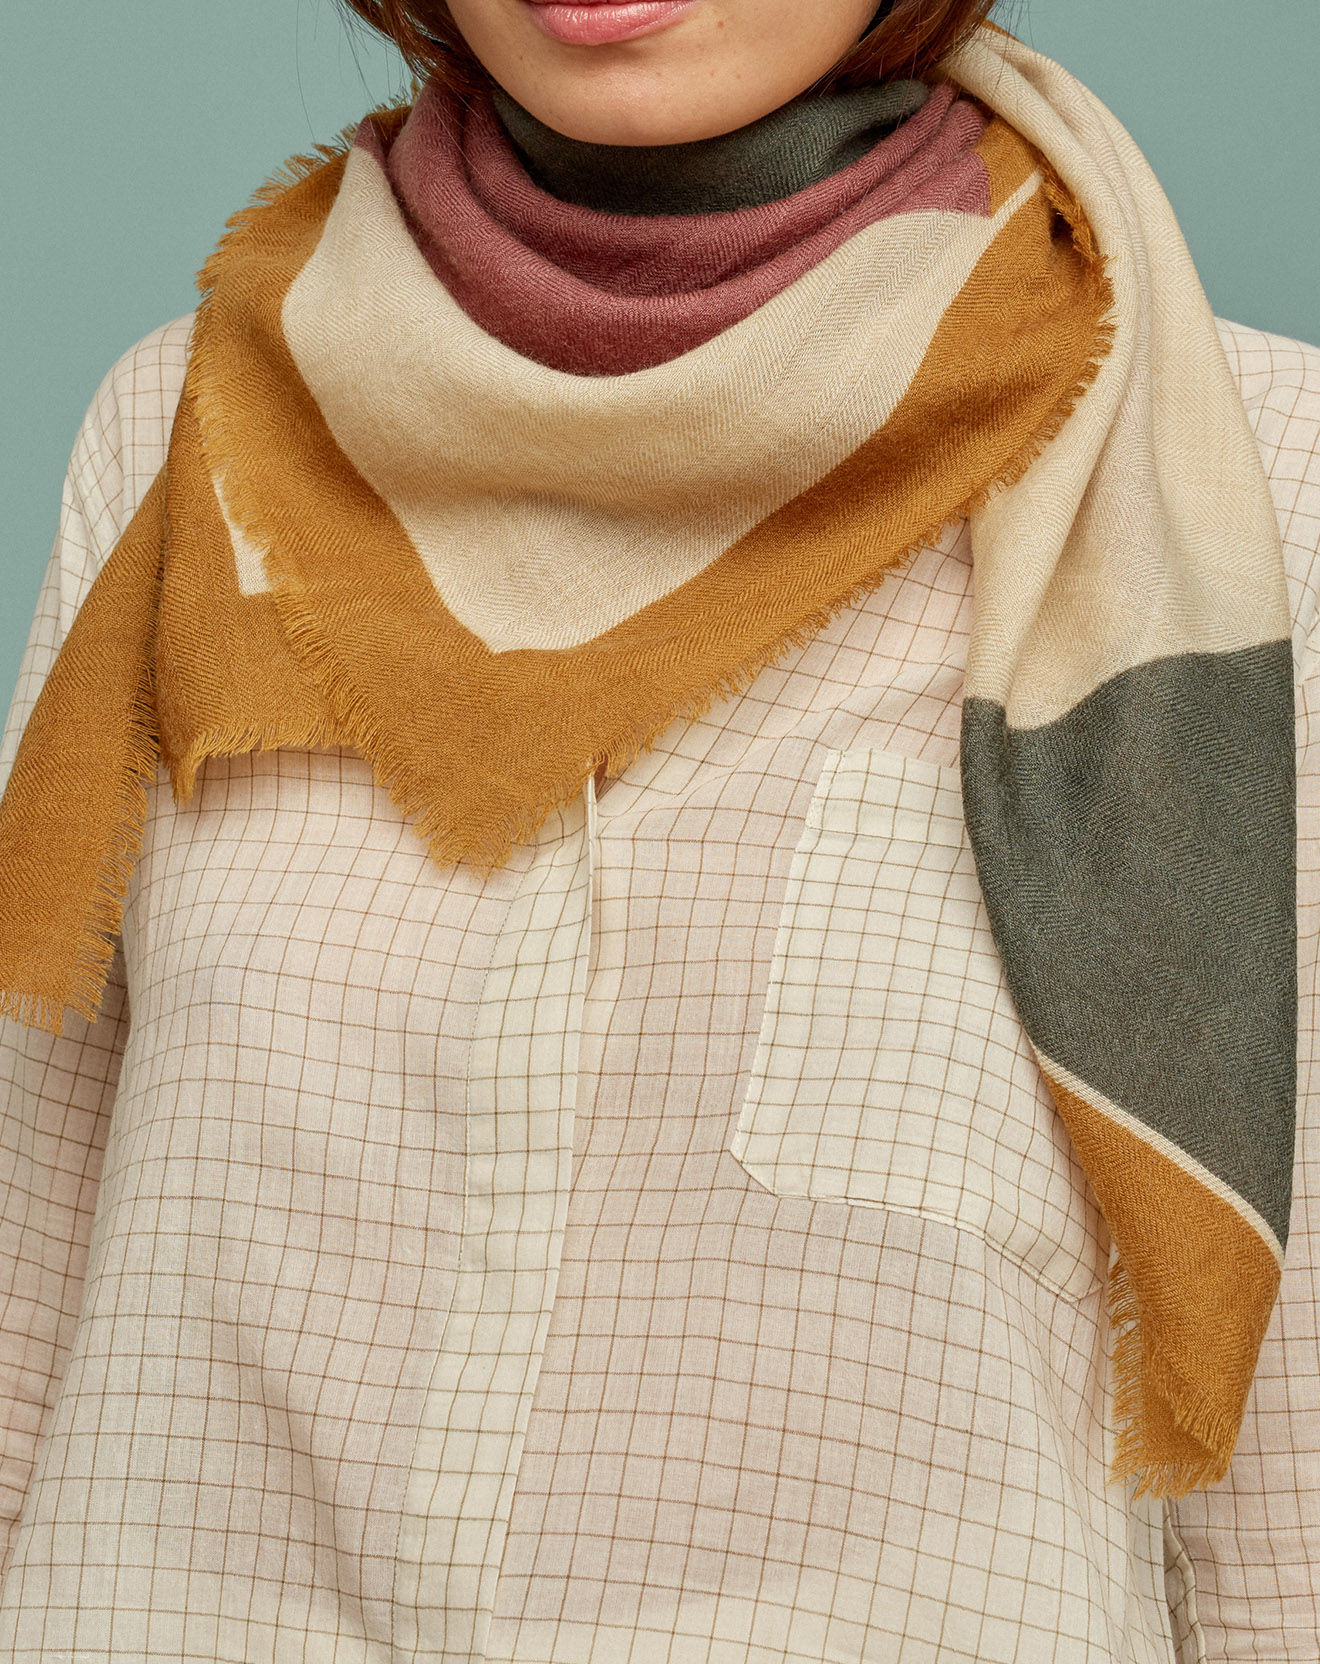 Carré foulard 100% Laine orange/vert - 90x90 cm